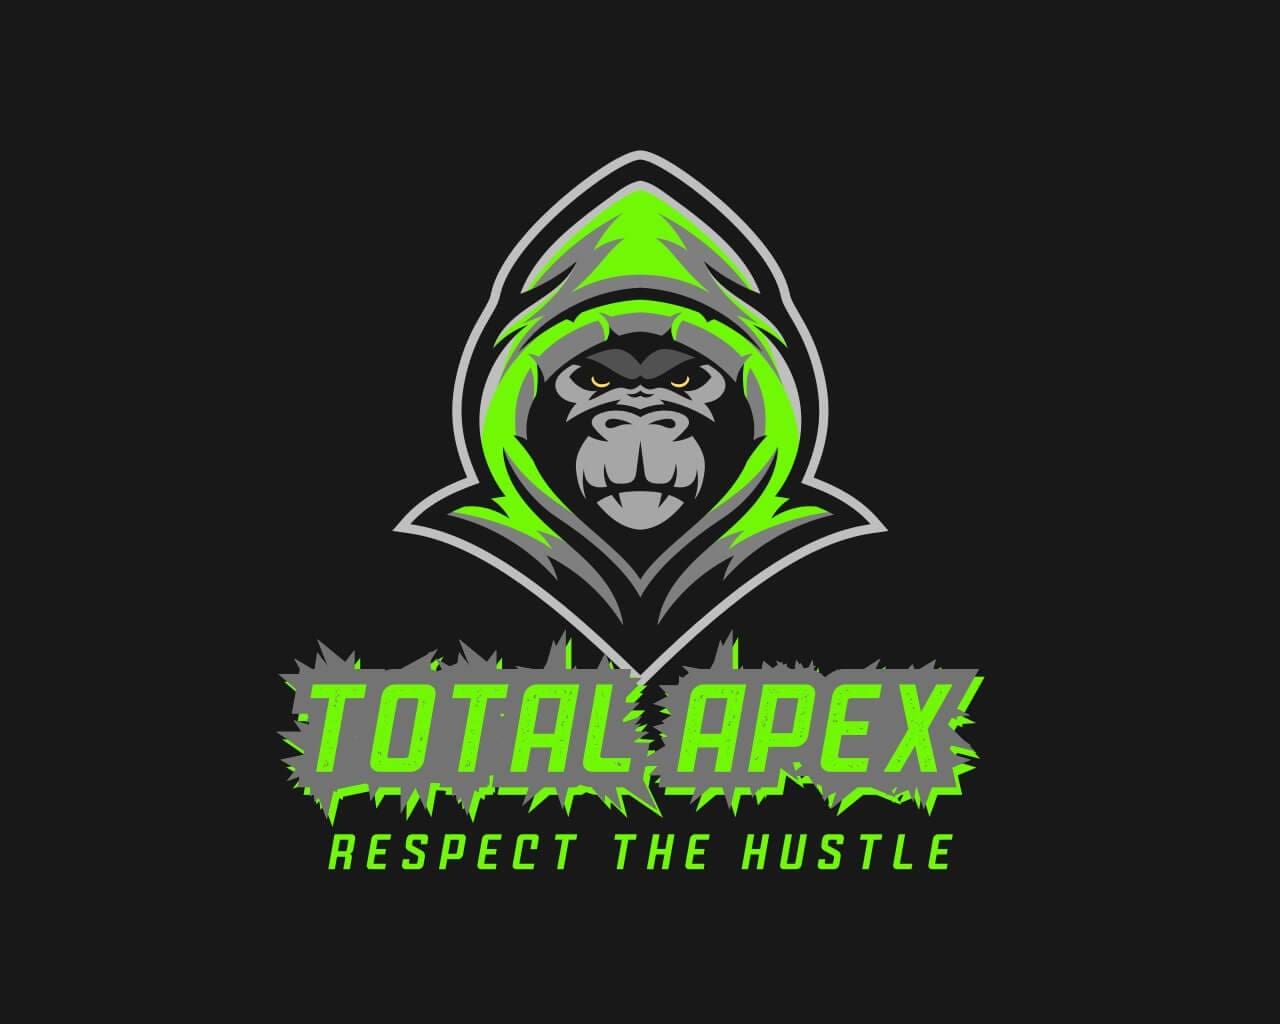 Total Apex Trade Mark Logo